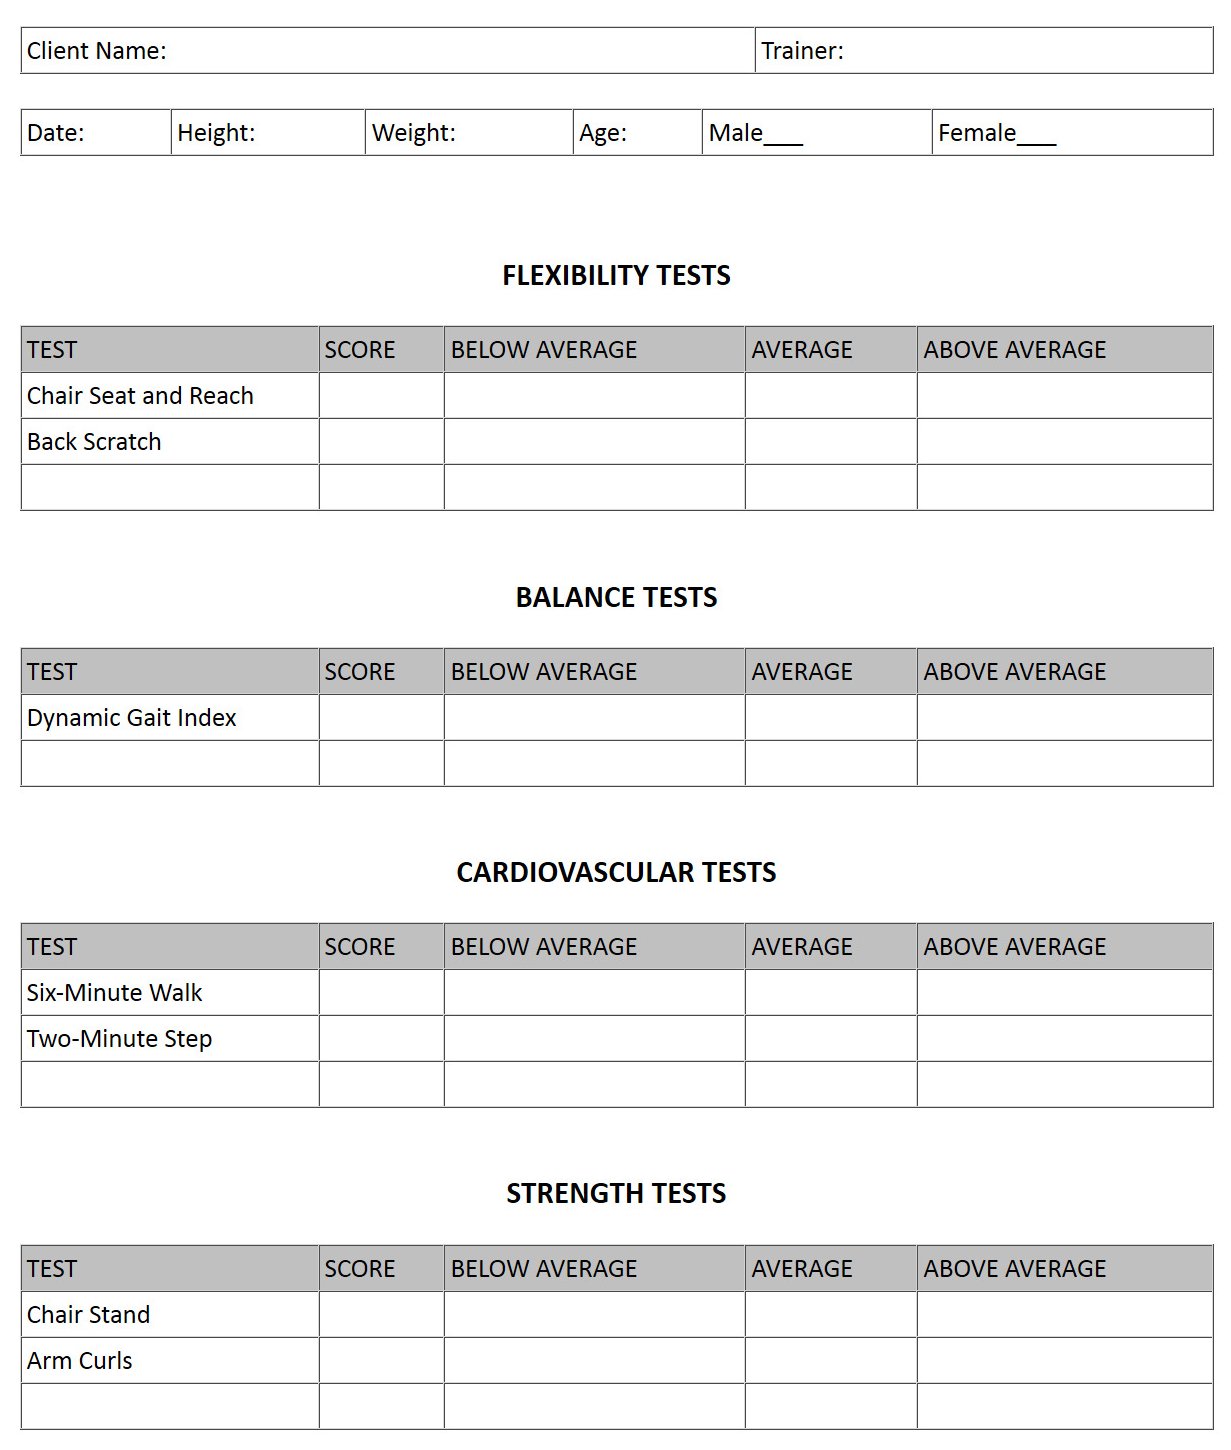 Brief Description Of Senior Fitness Test Items* - Procedure For